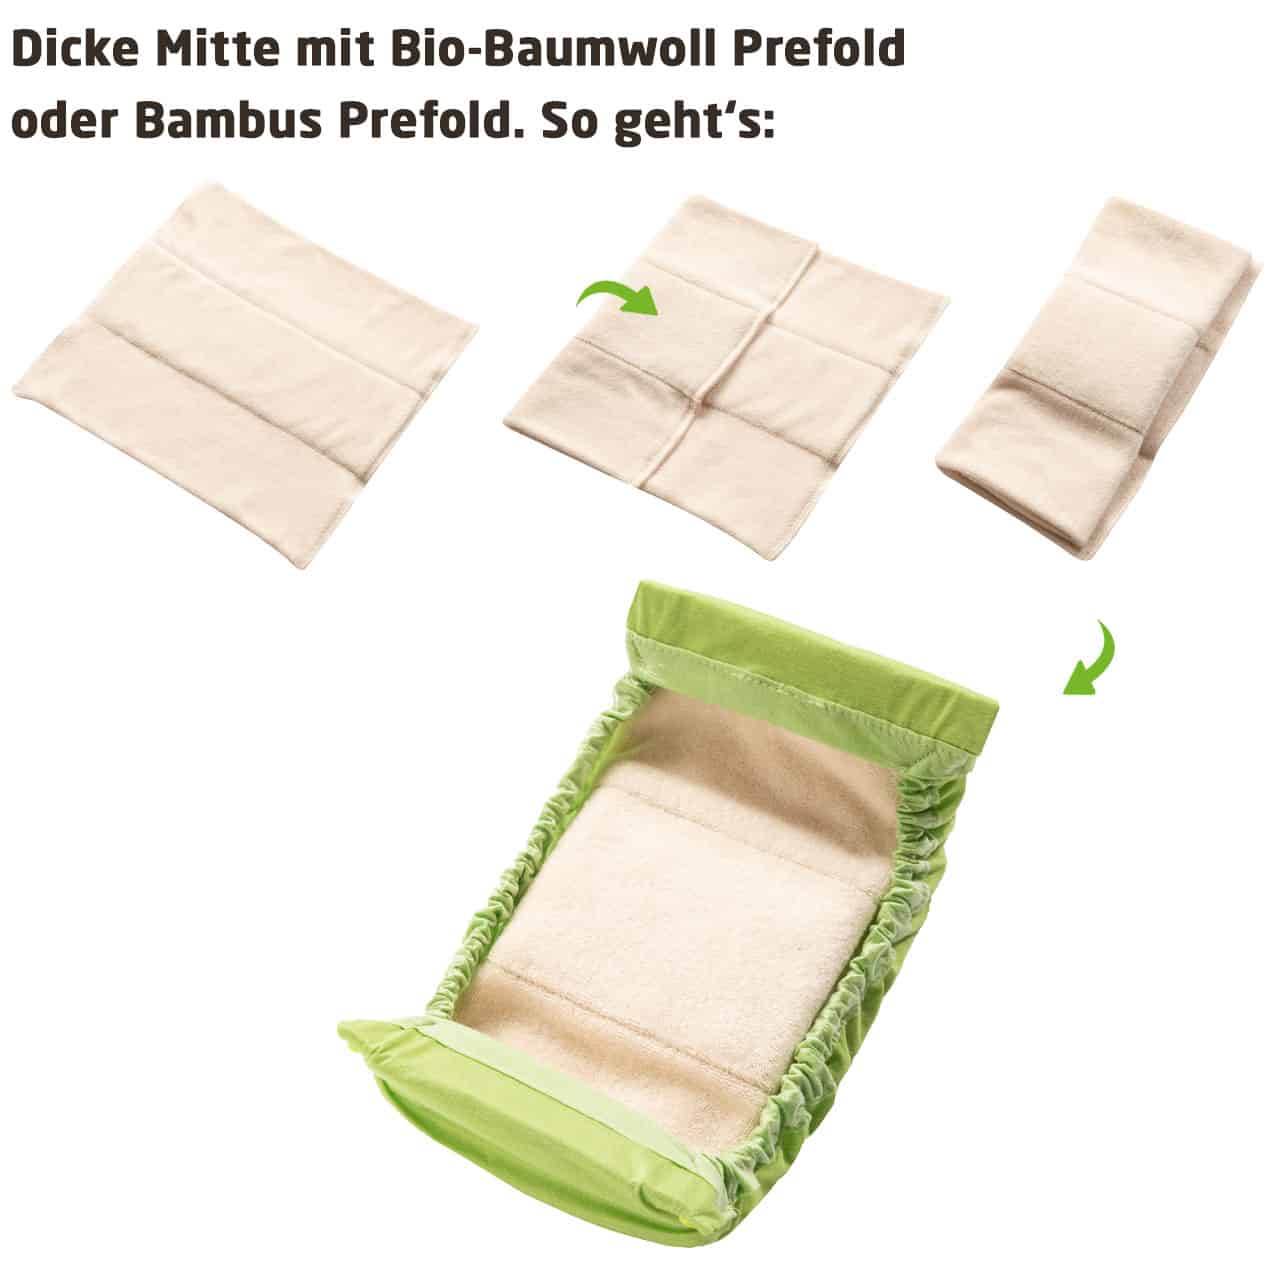 Dicke-Mitte-Bio-Baumwoll-Prefold_v1.jpg